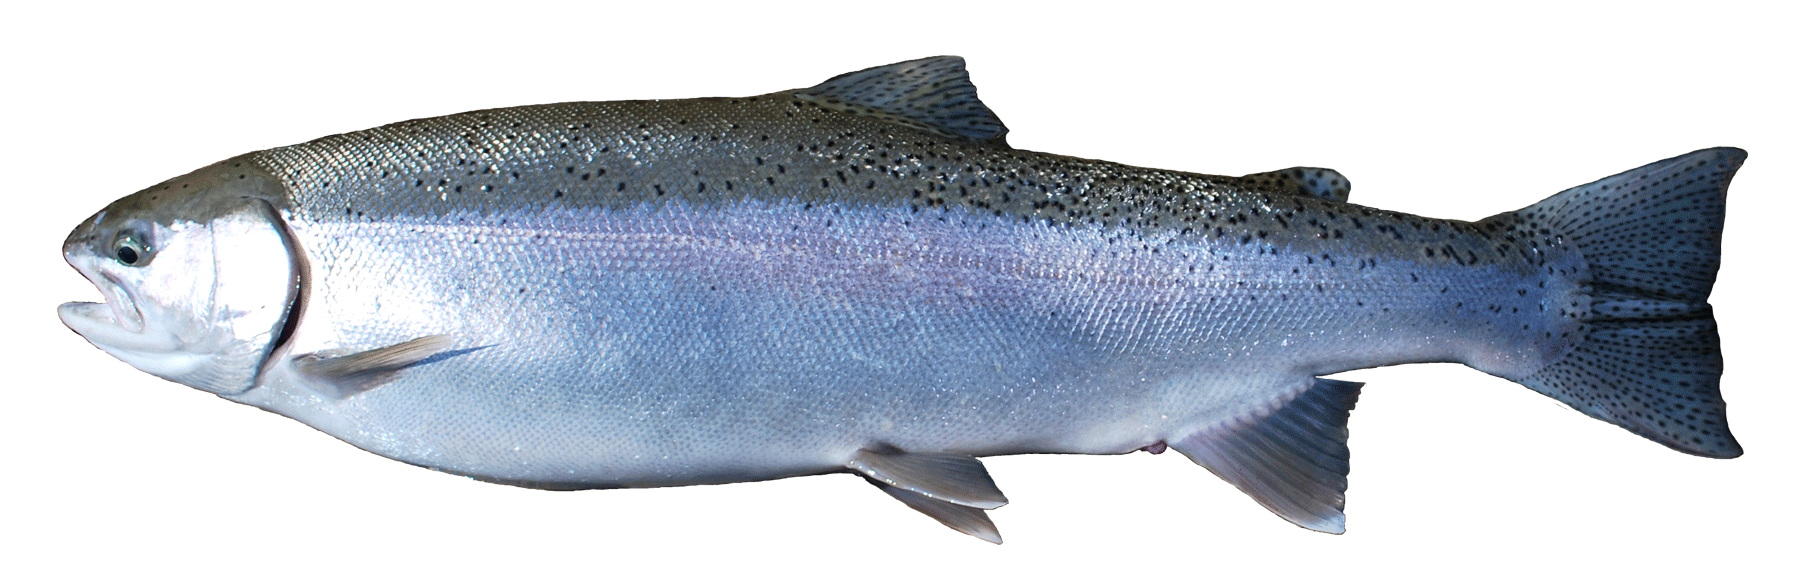 salmon clipart sockeye salmon